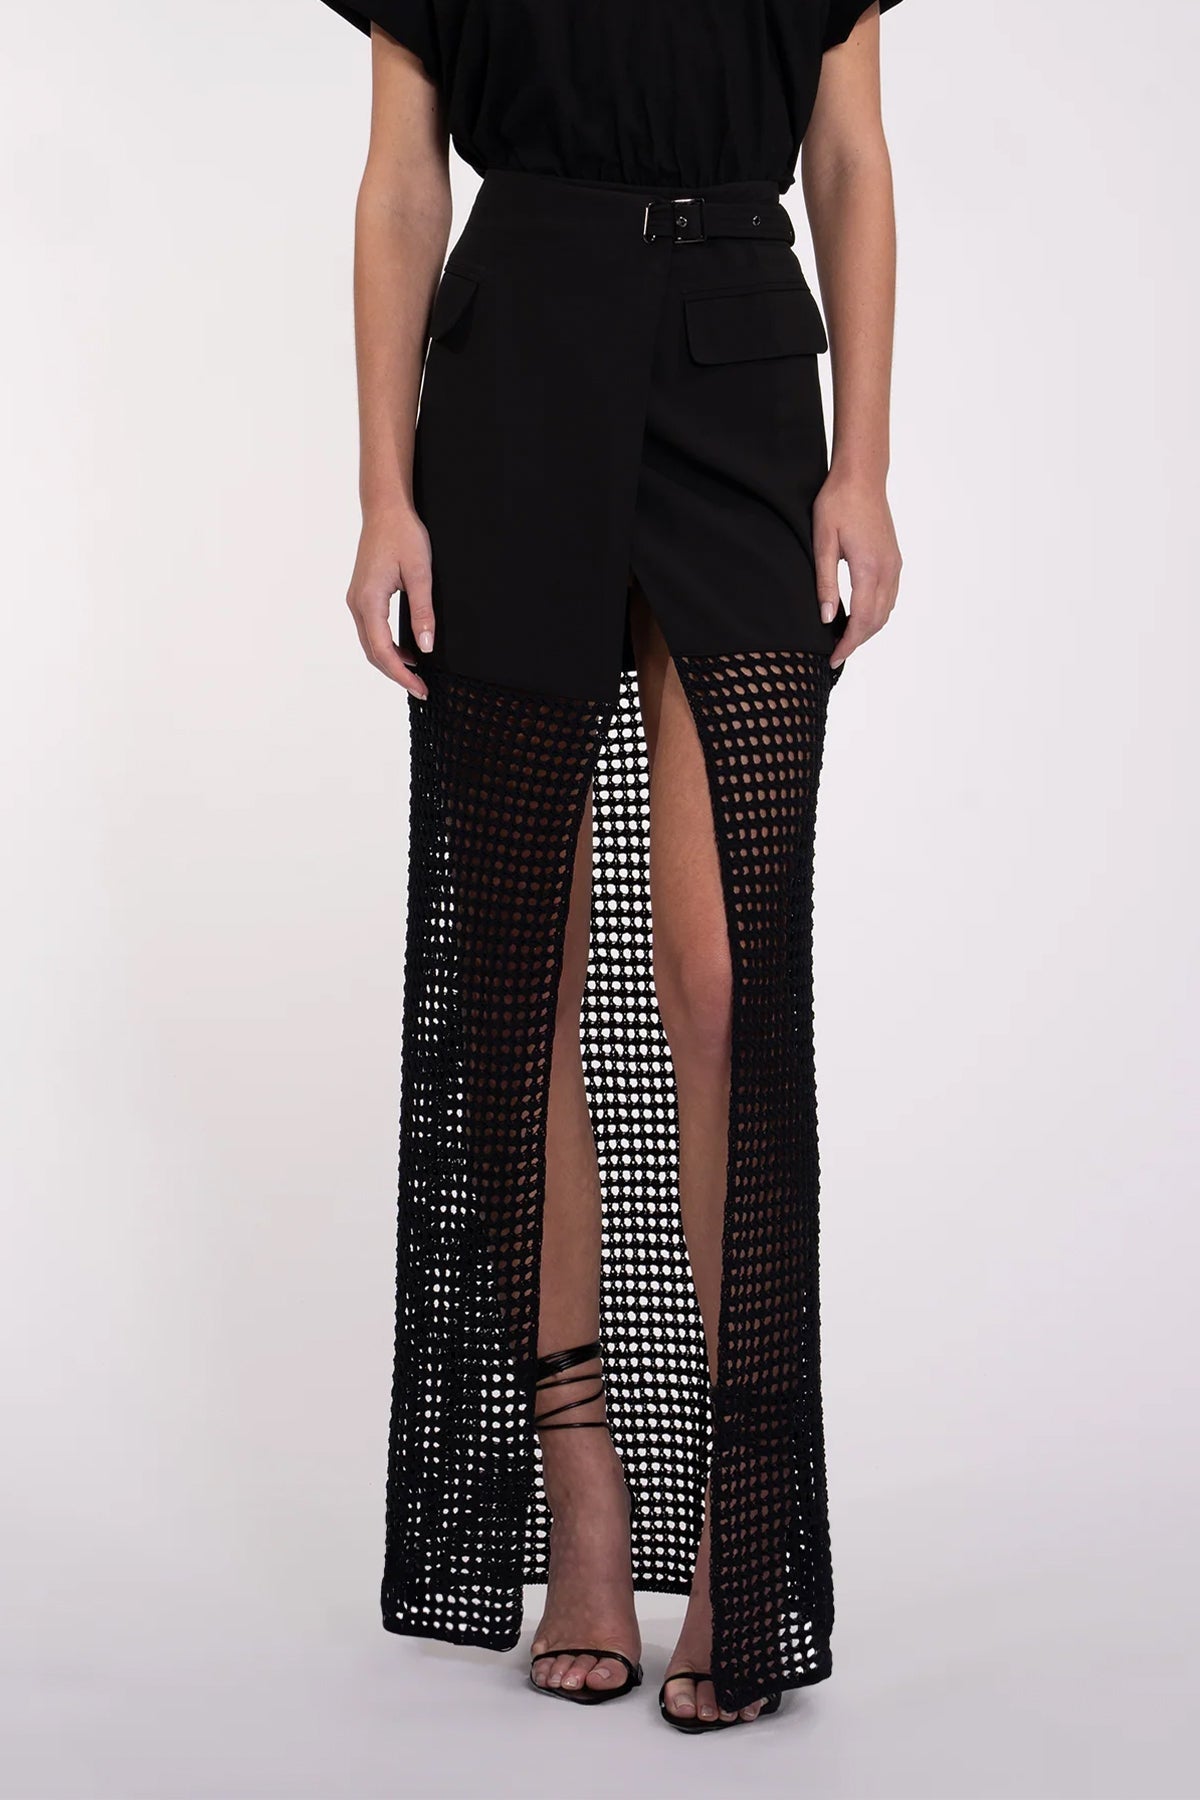 Tyra Maxi Skirt in Black - shop-olivia.com